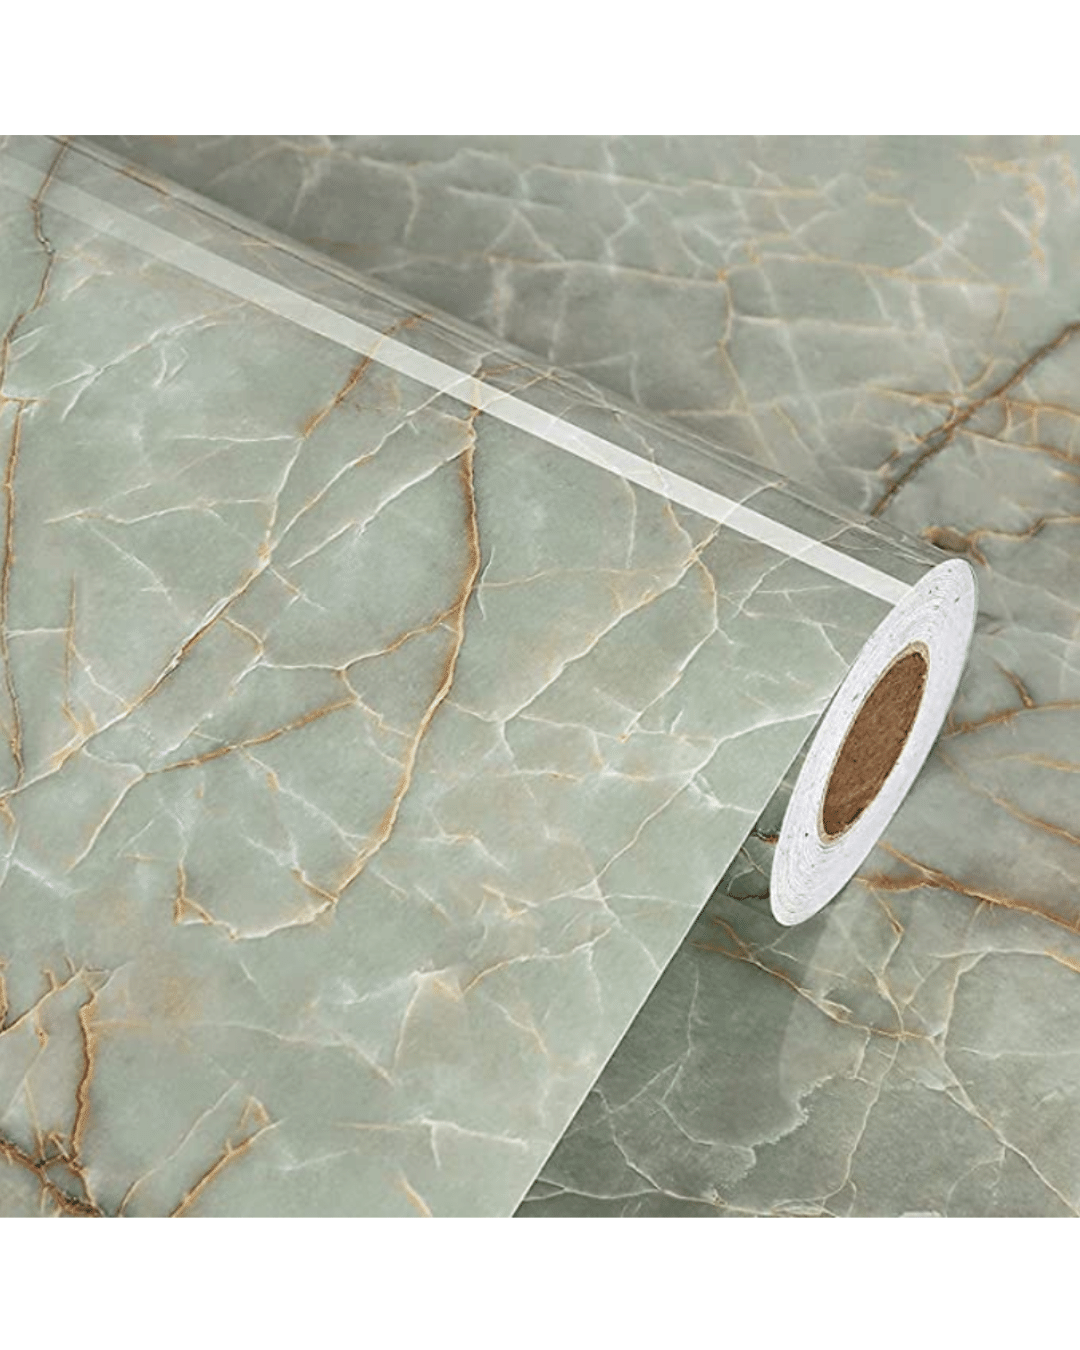 LIKILIKI Green Marble Contact Paper for Countertops Waterproof Granite Marble